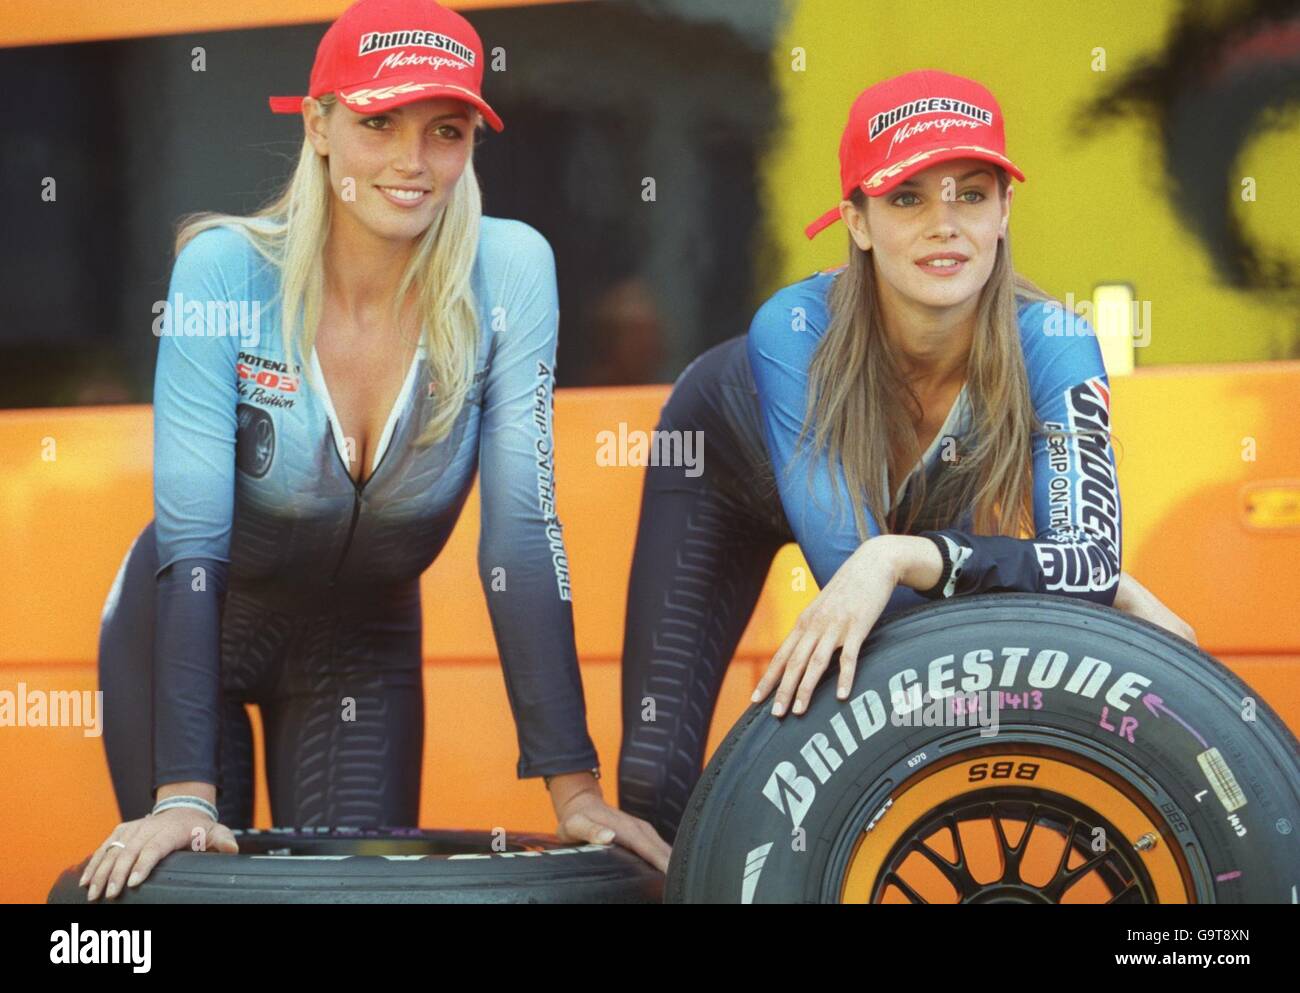 Formula One Motor Racing - European Grand Prix. Two models in Bridgestone  lycra outfits Stock Photo - Alamy